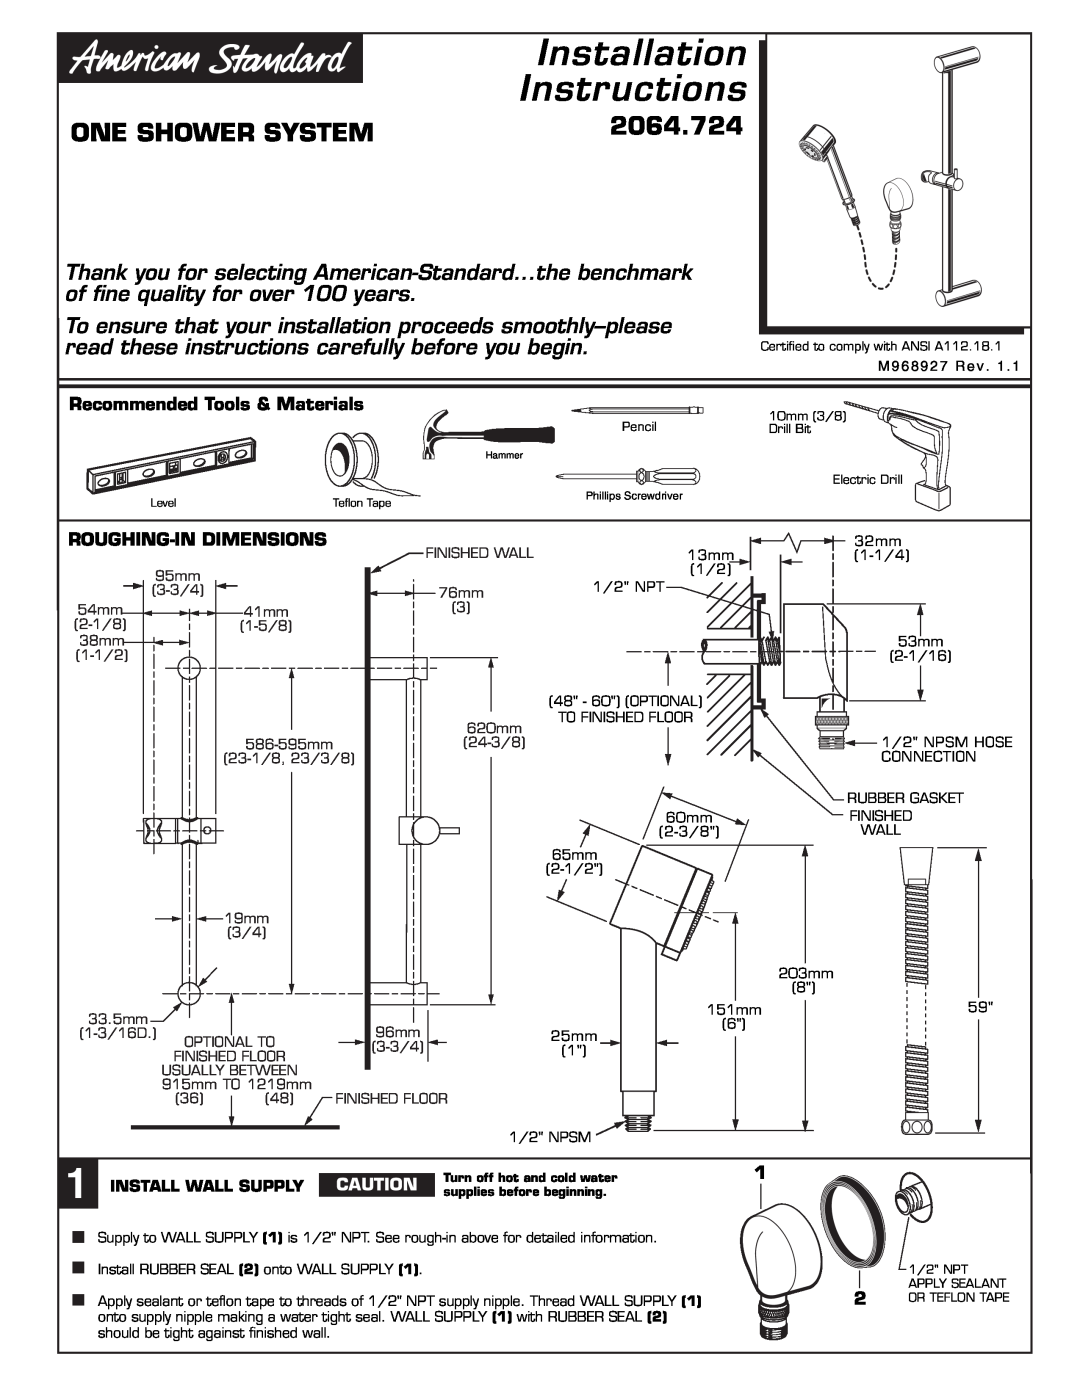 American Standard 2064.724 installation instructions Installation Instructions, One Shower System 